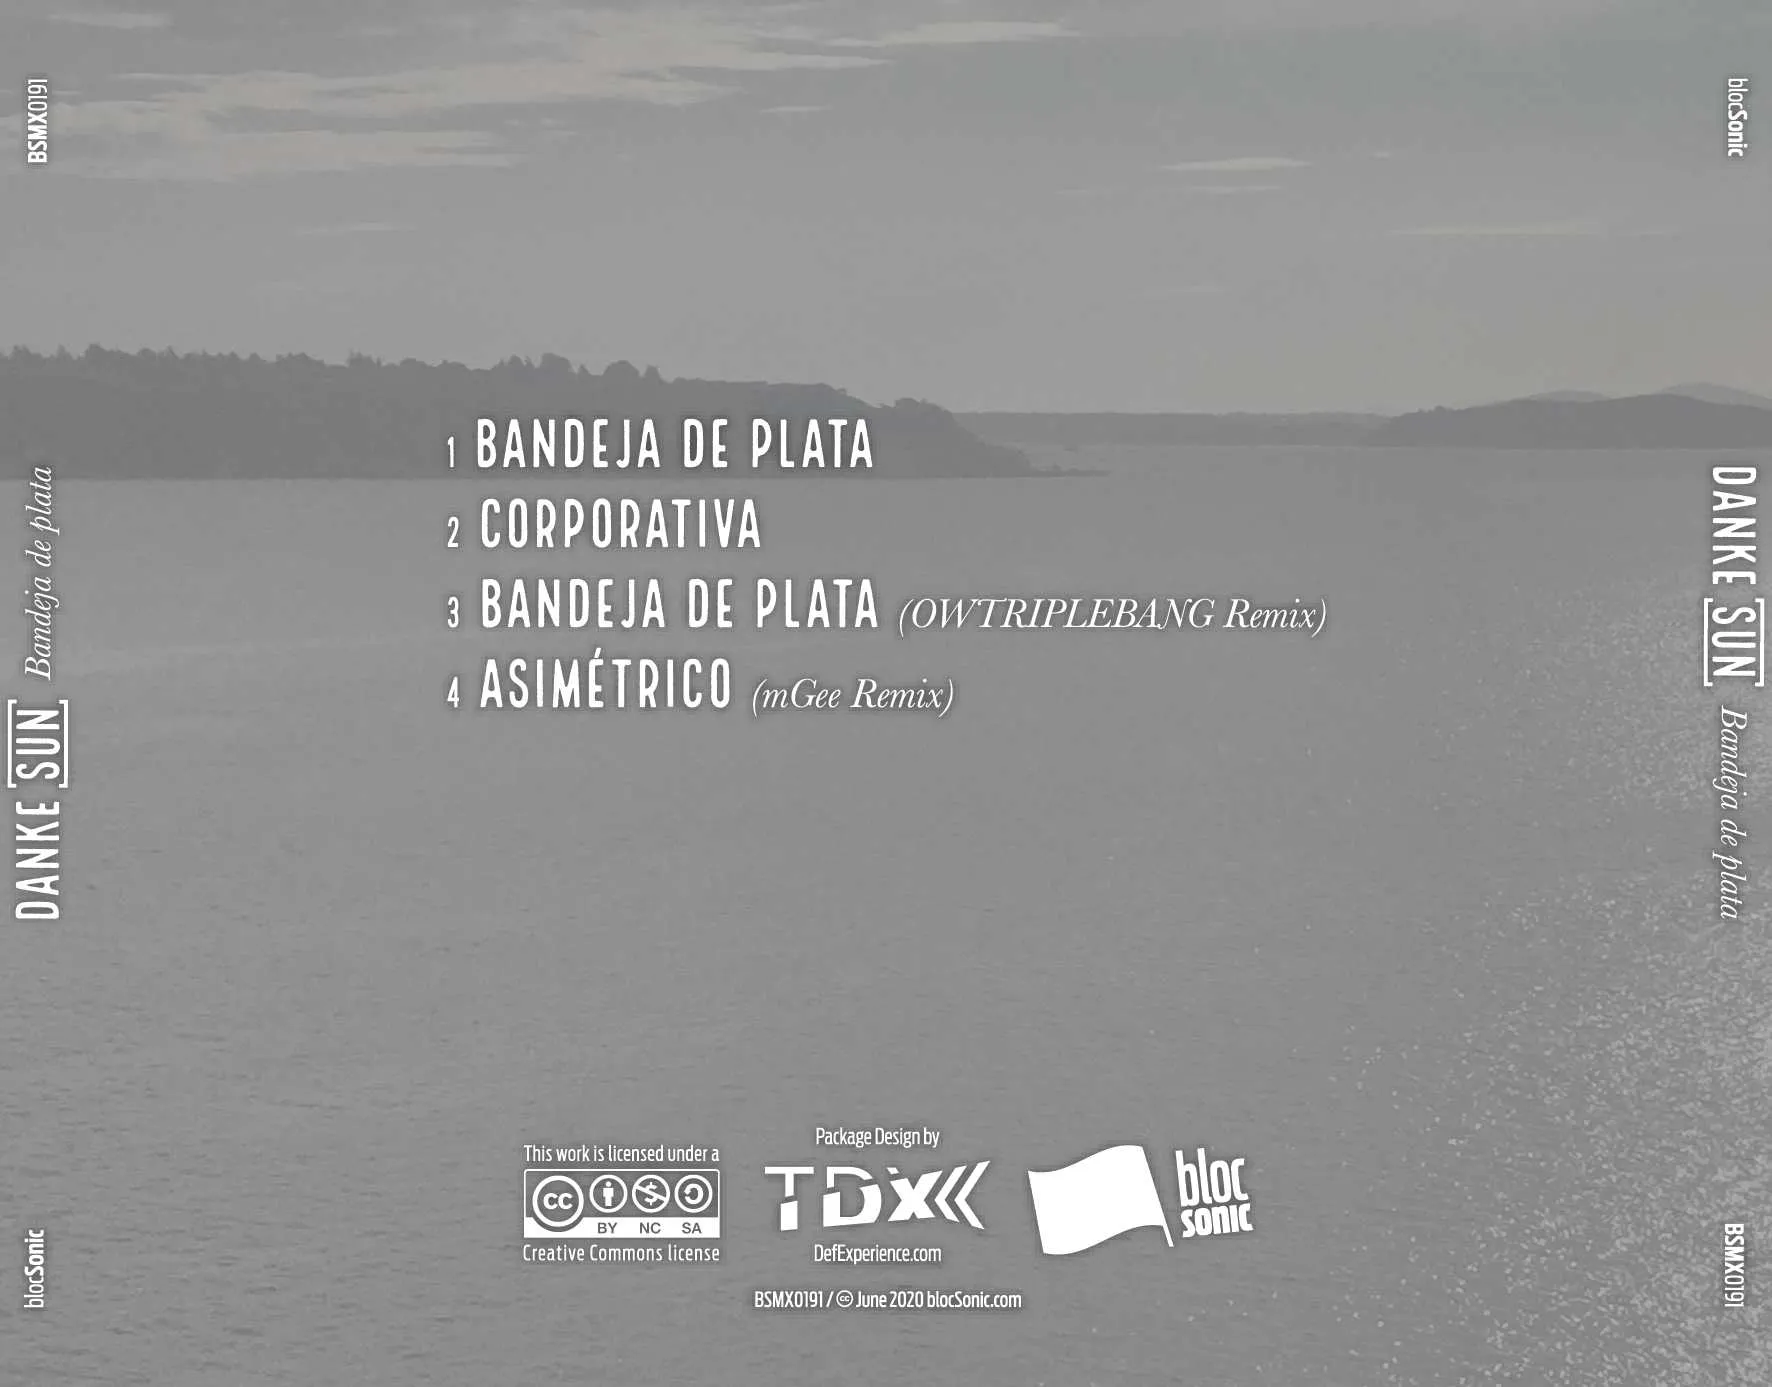 Album traycard for “Bandeja de plata” by Danke Sun